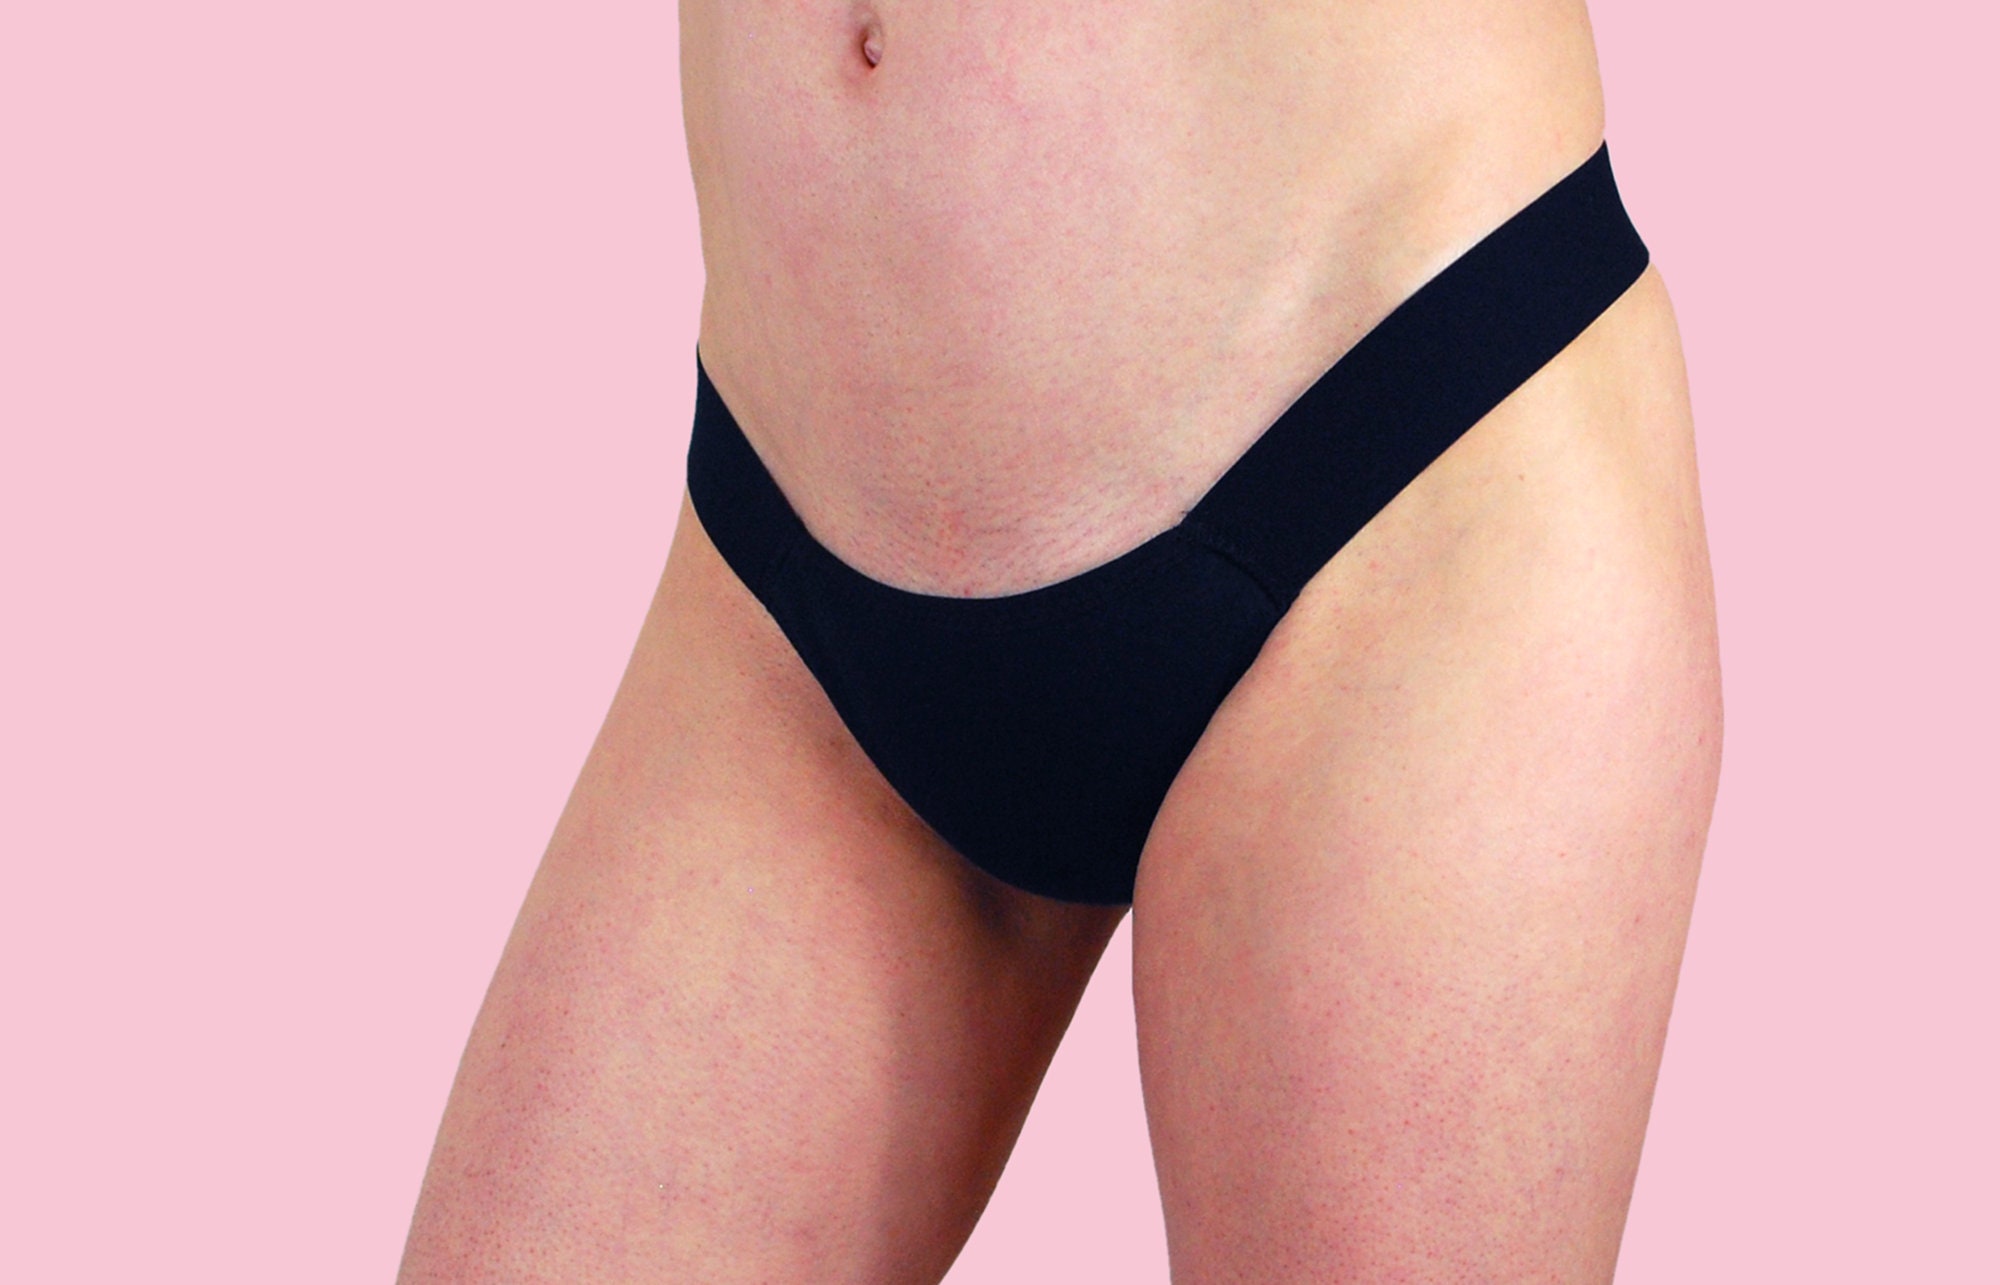 Black Thong Panties // #1 Seamless Underwear // EBY™